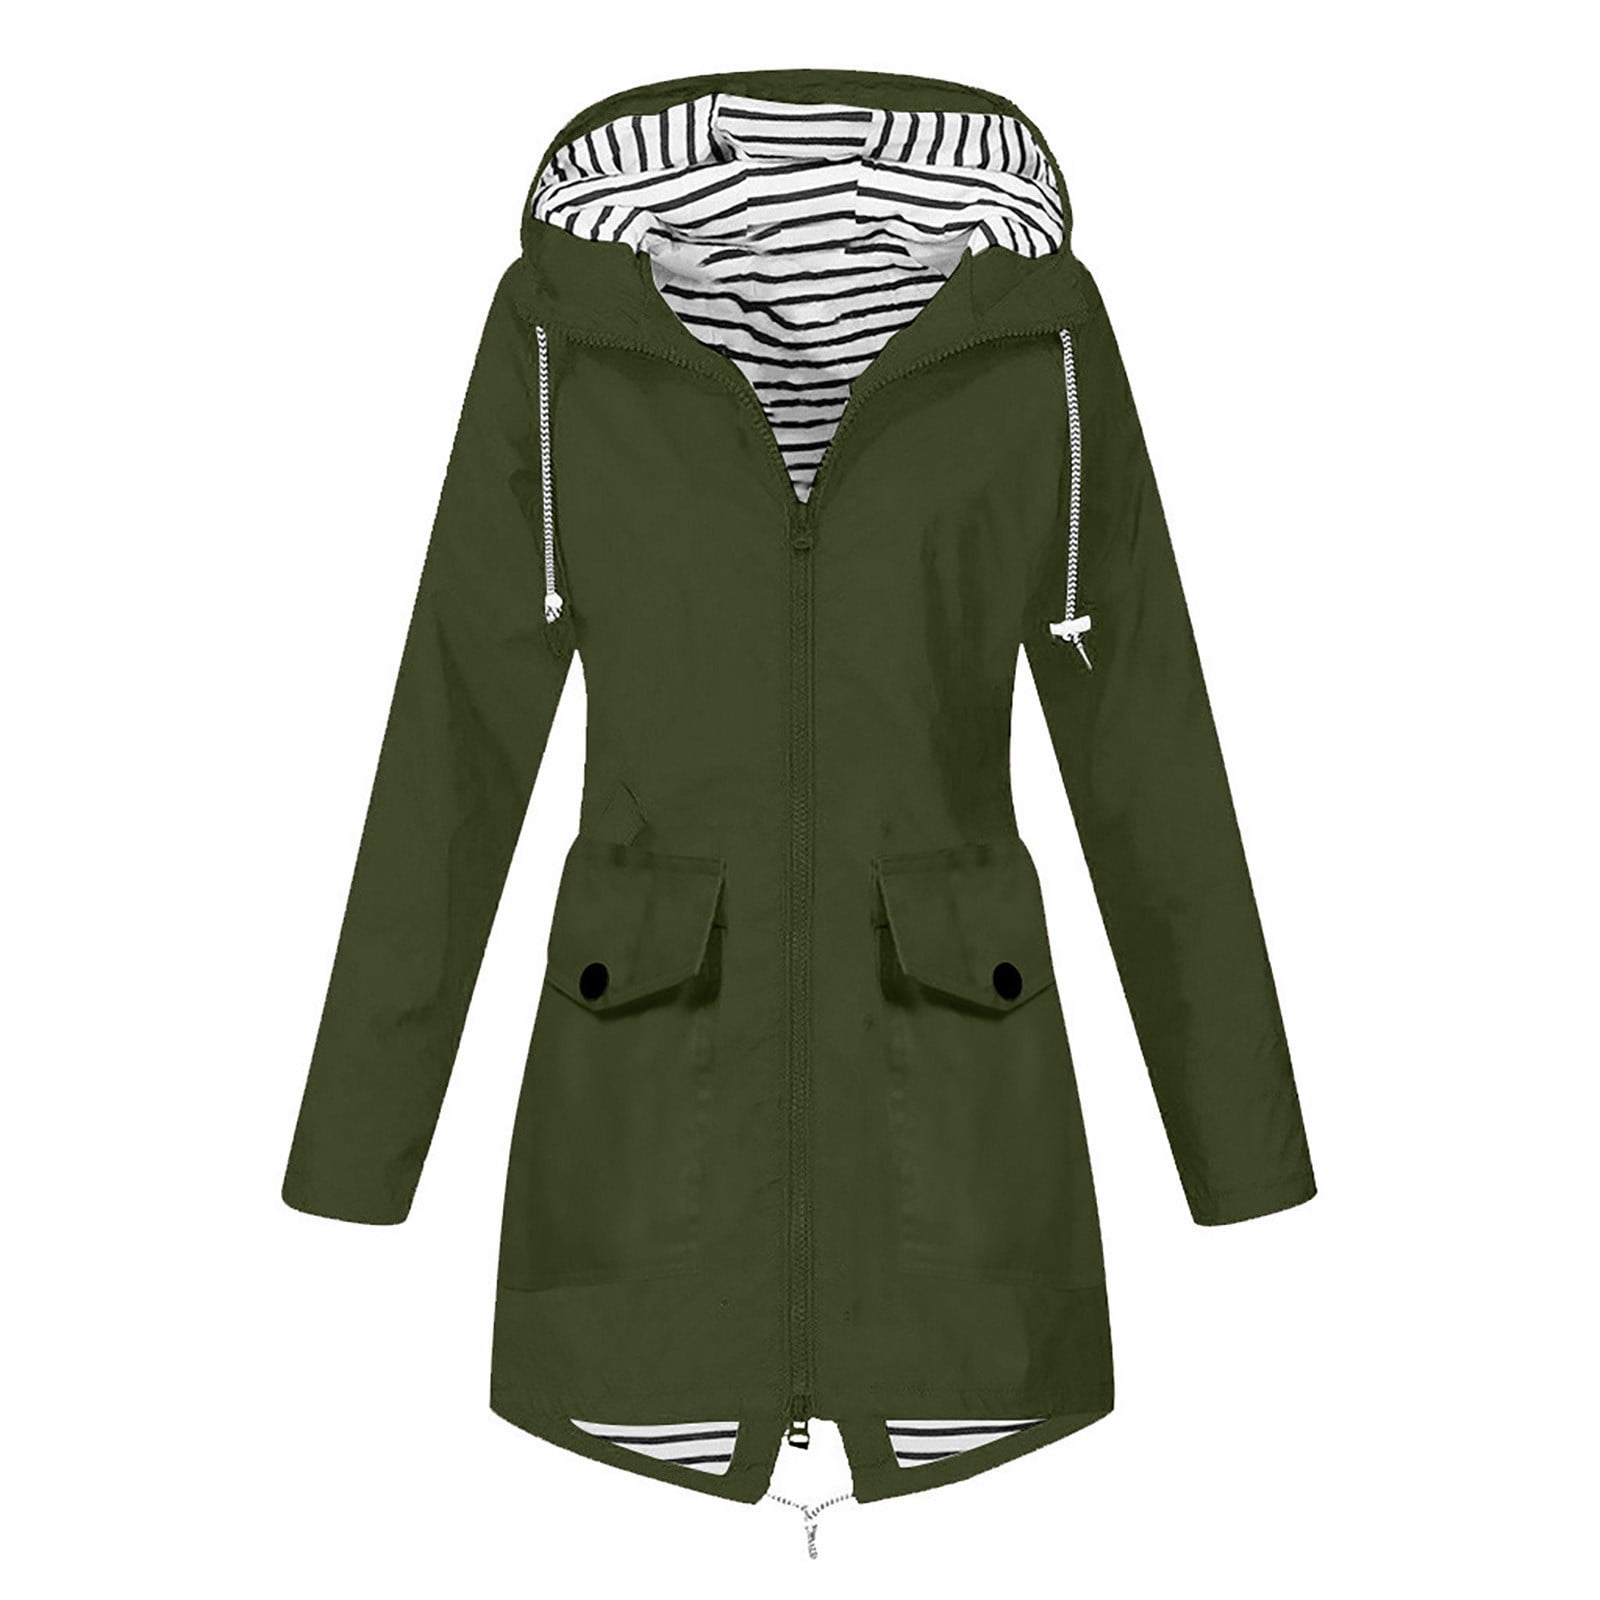 JUUYY Women's Rain Jacket Plus Size Long Raincoat Lightweight ...